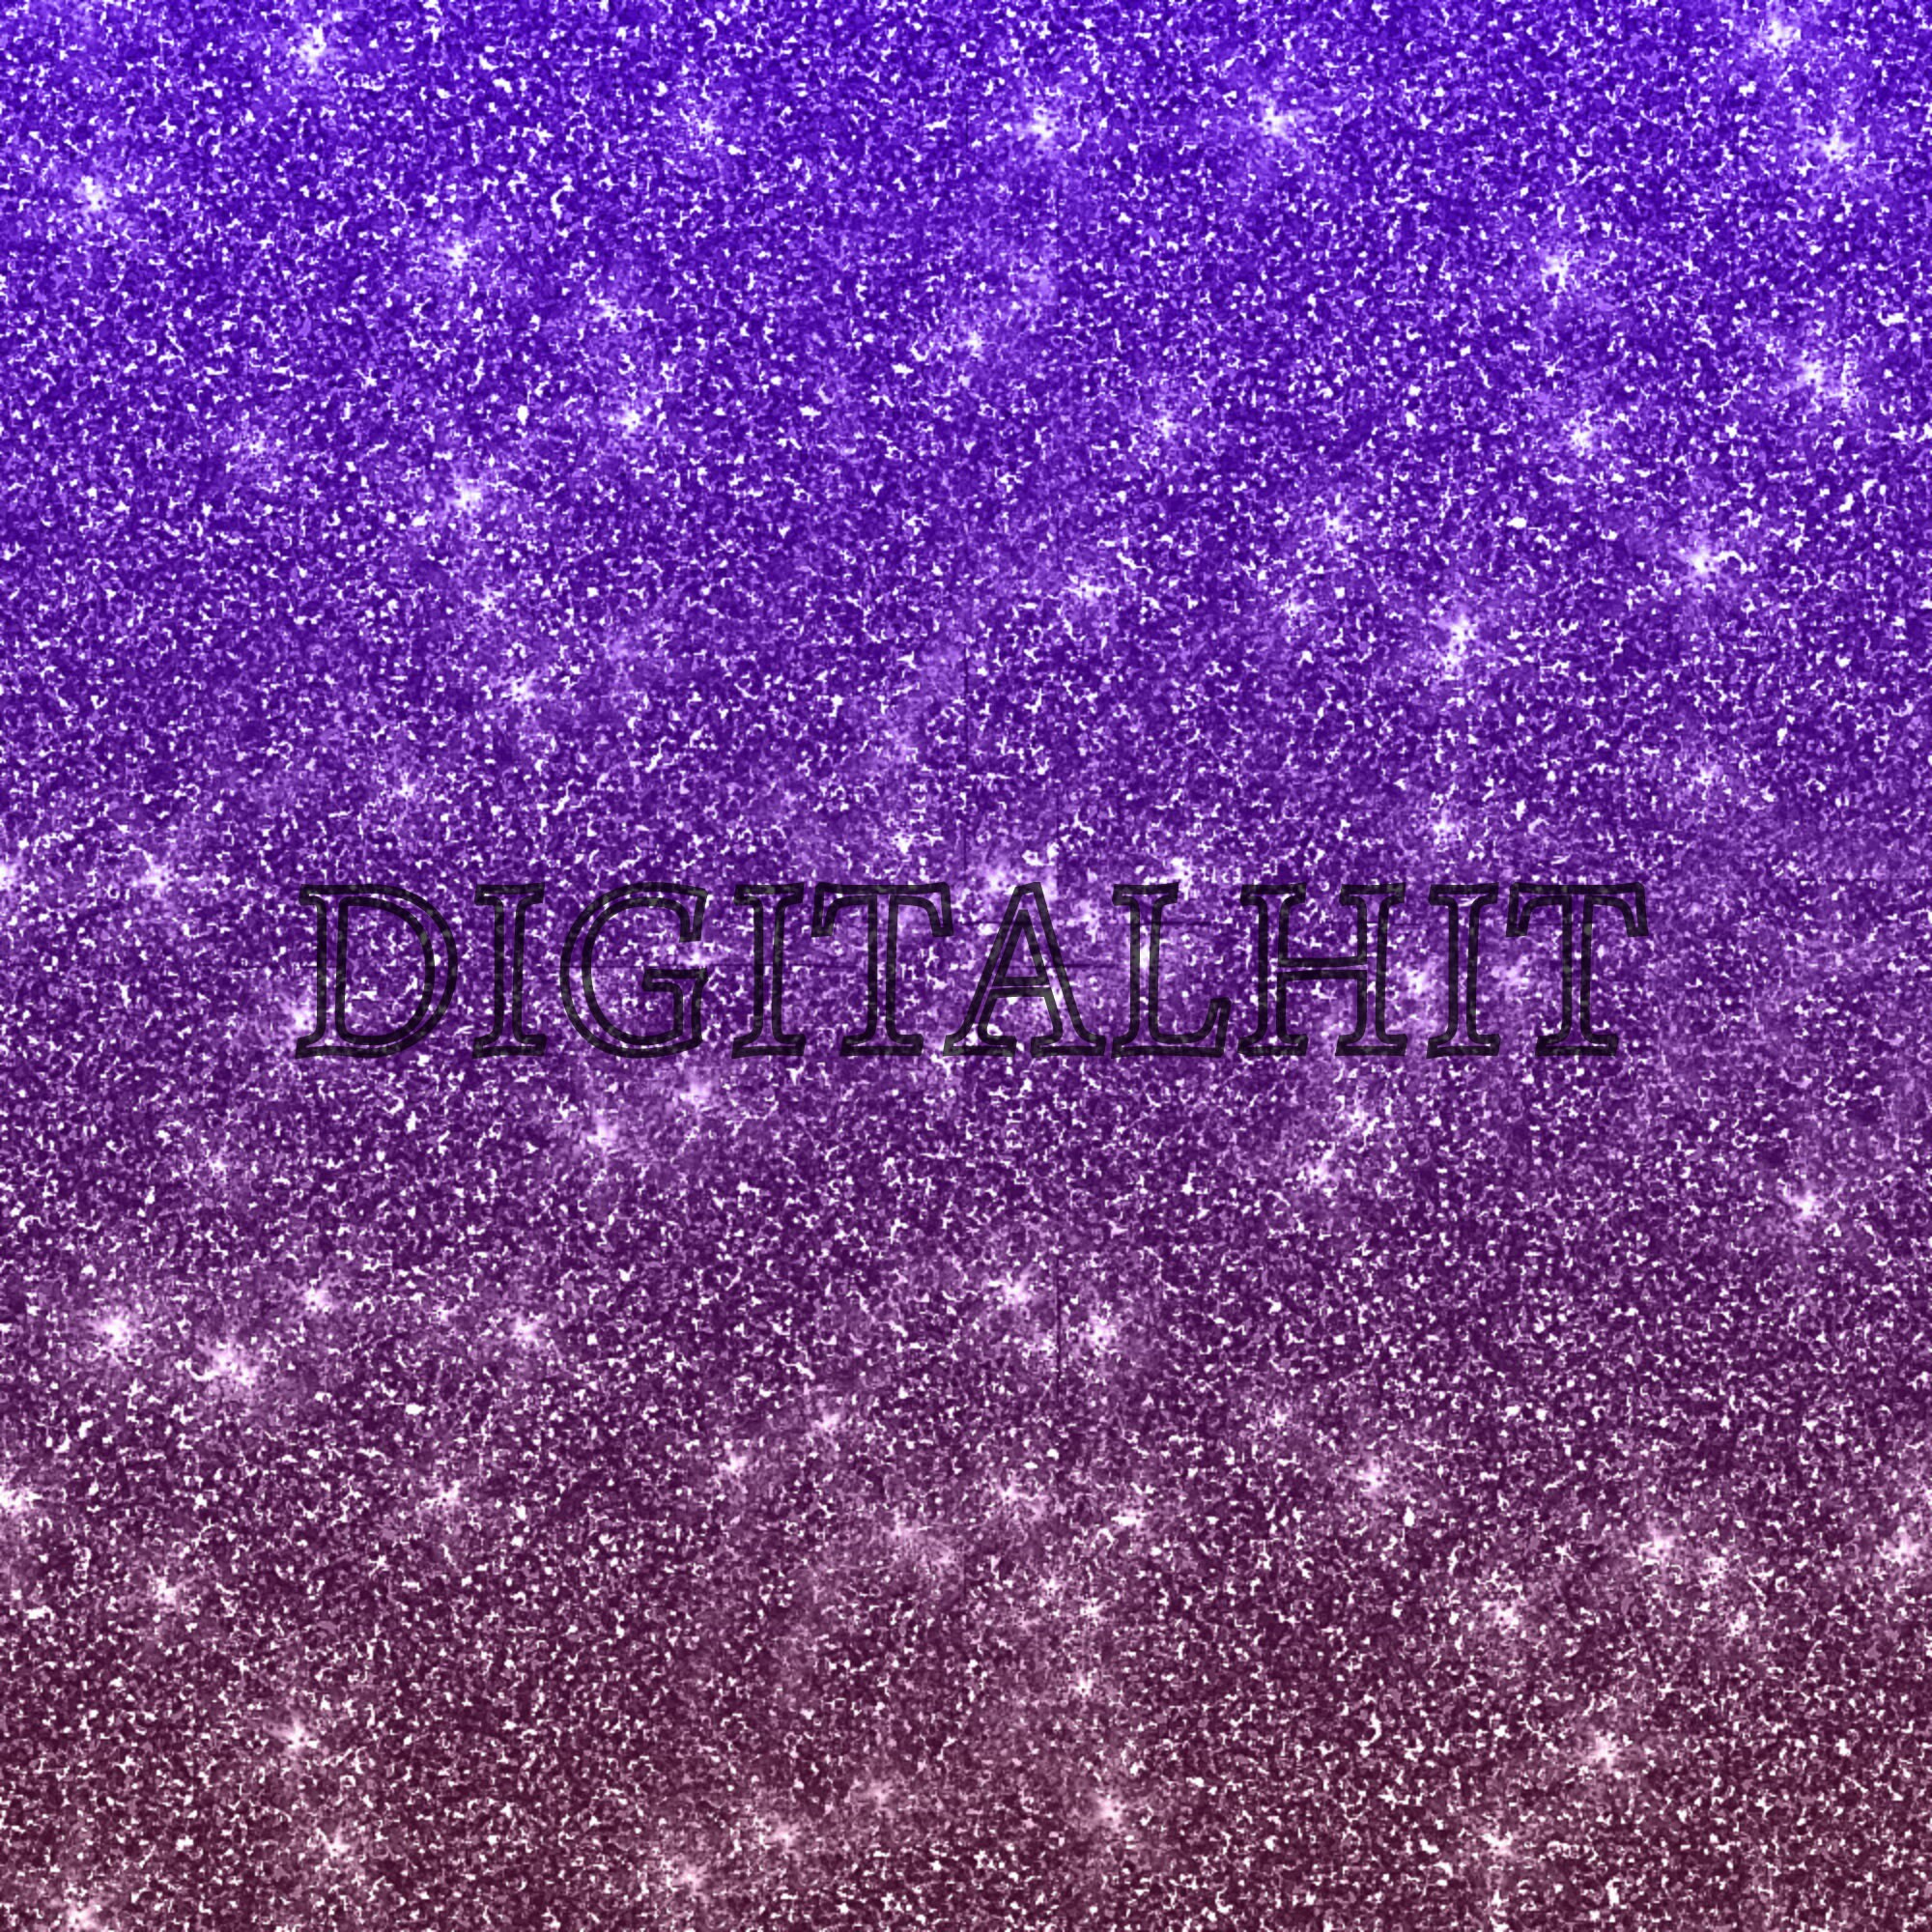 Brown and Purple Glitter Digital Paper,digital Paper, Contact